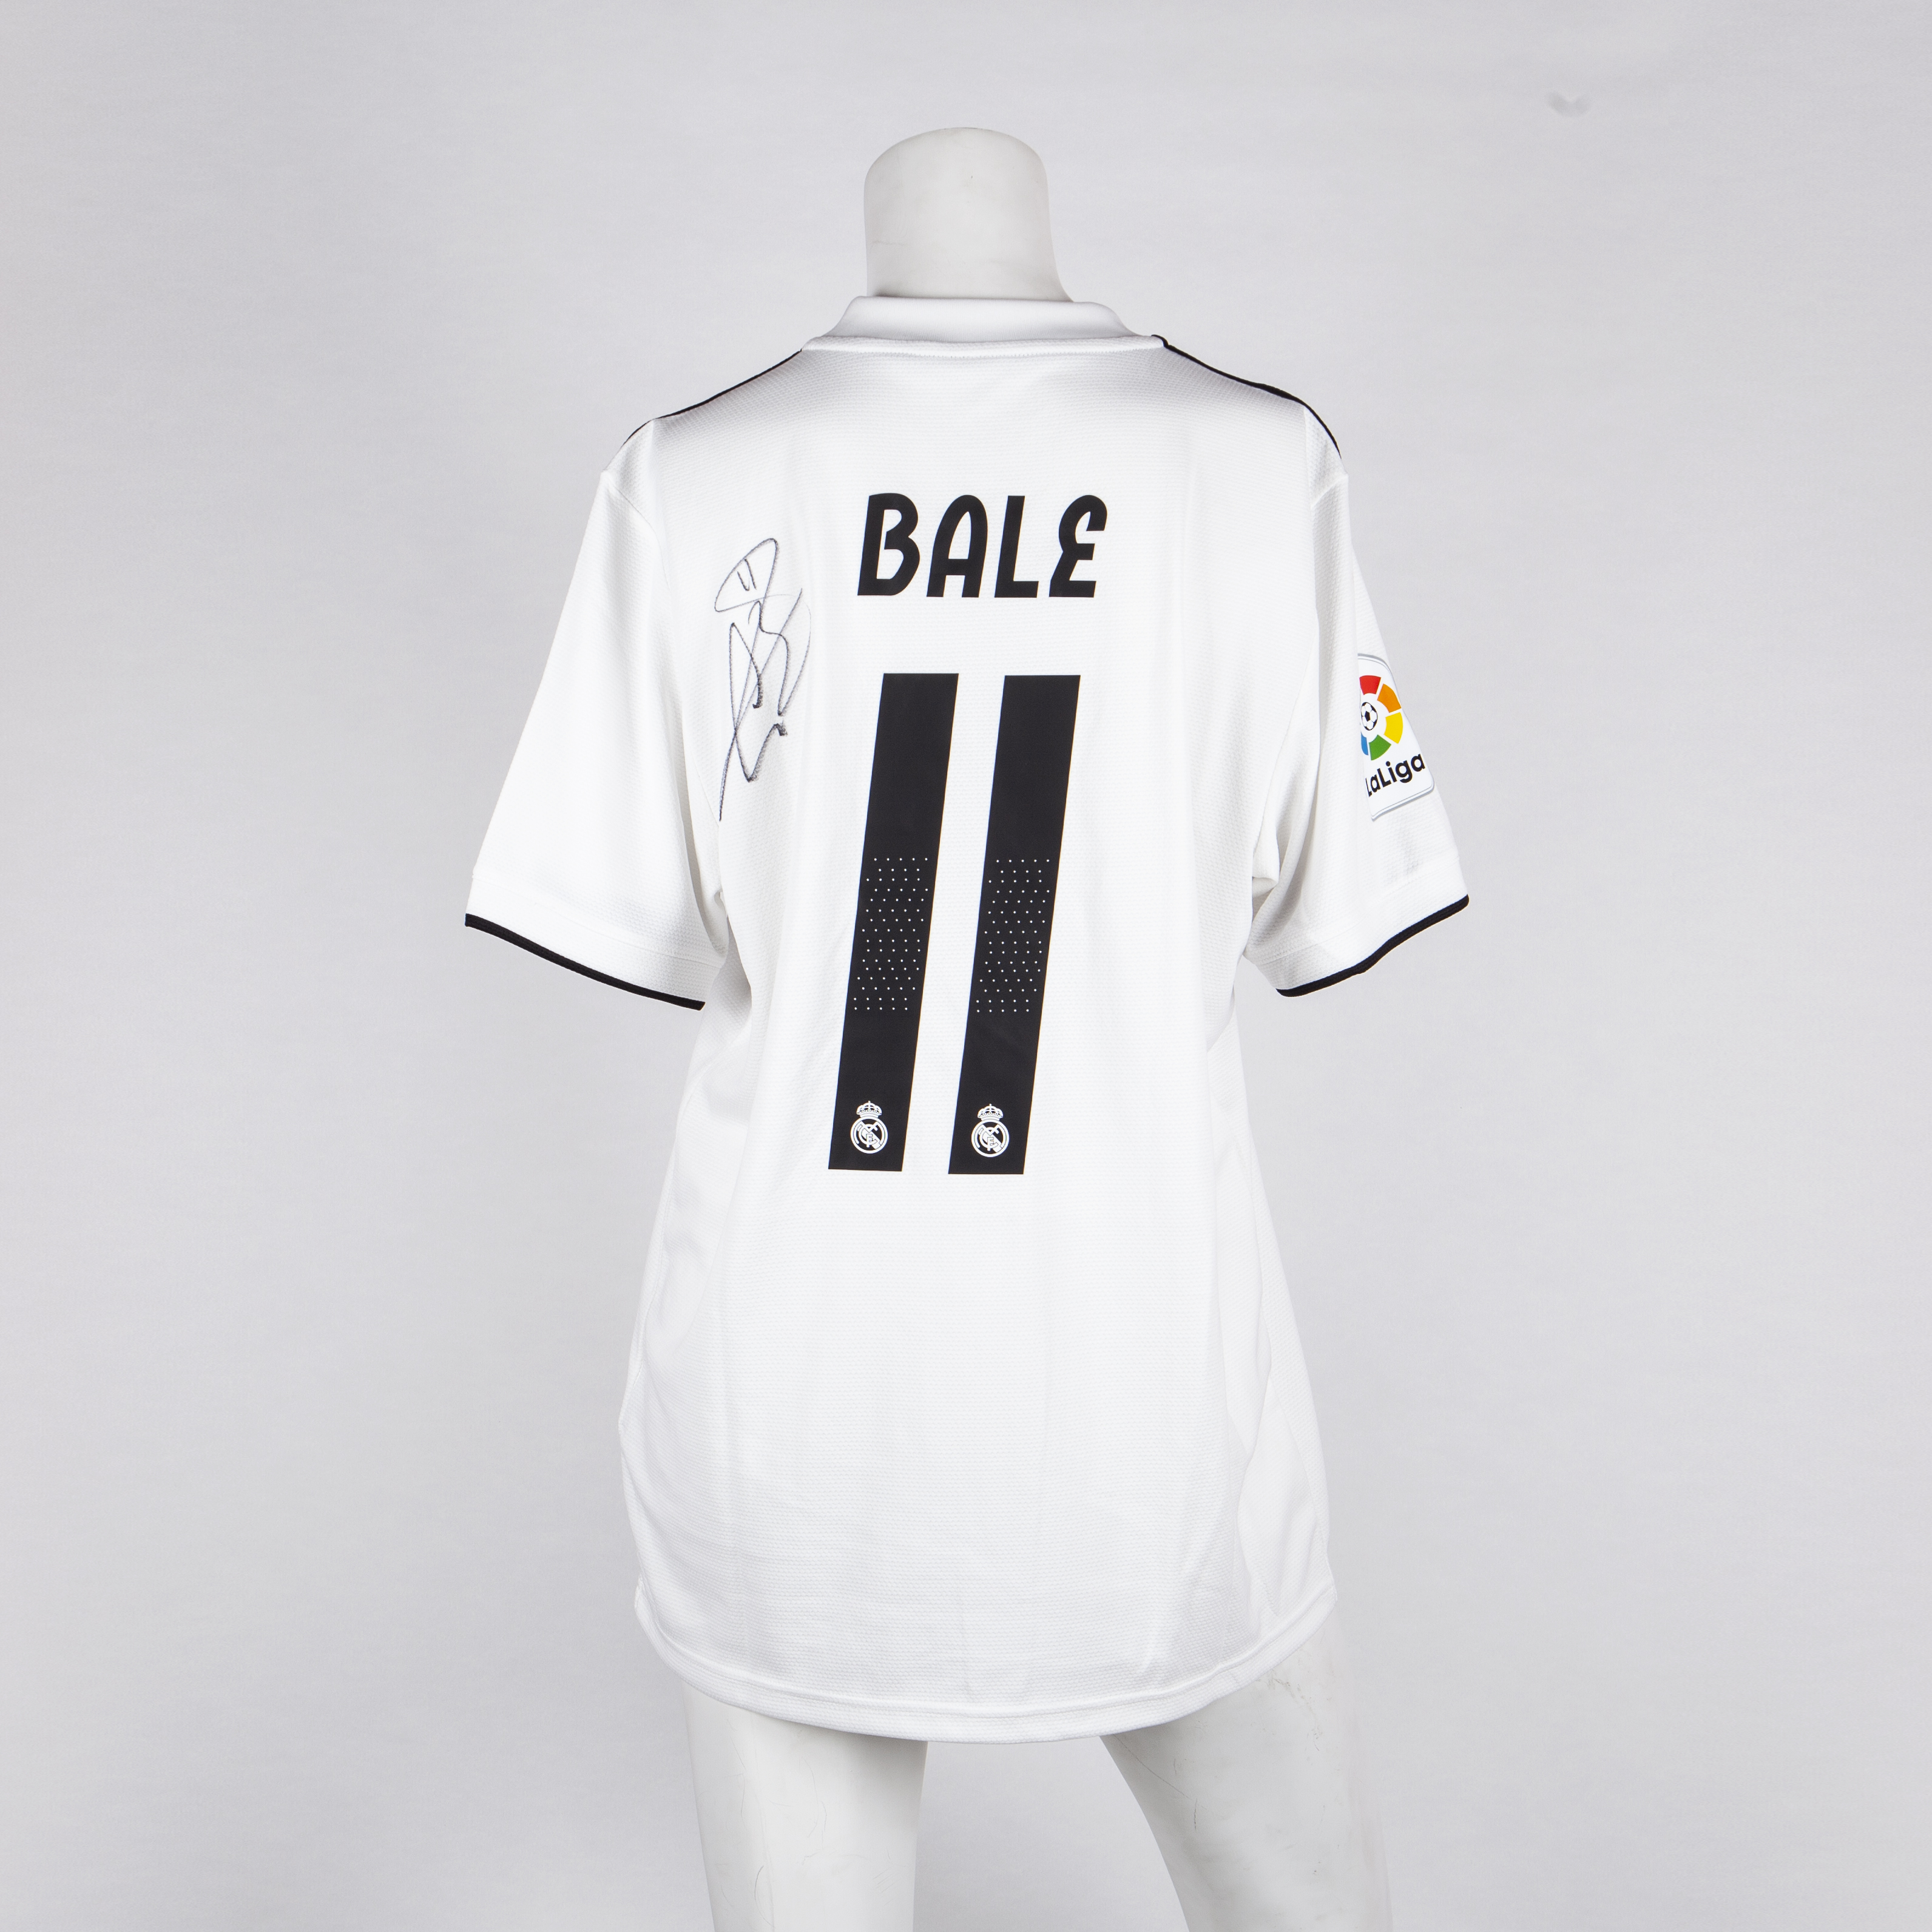 Gareth Bale's signed Real Madrid shirt